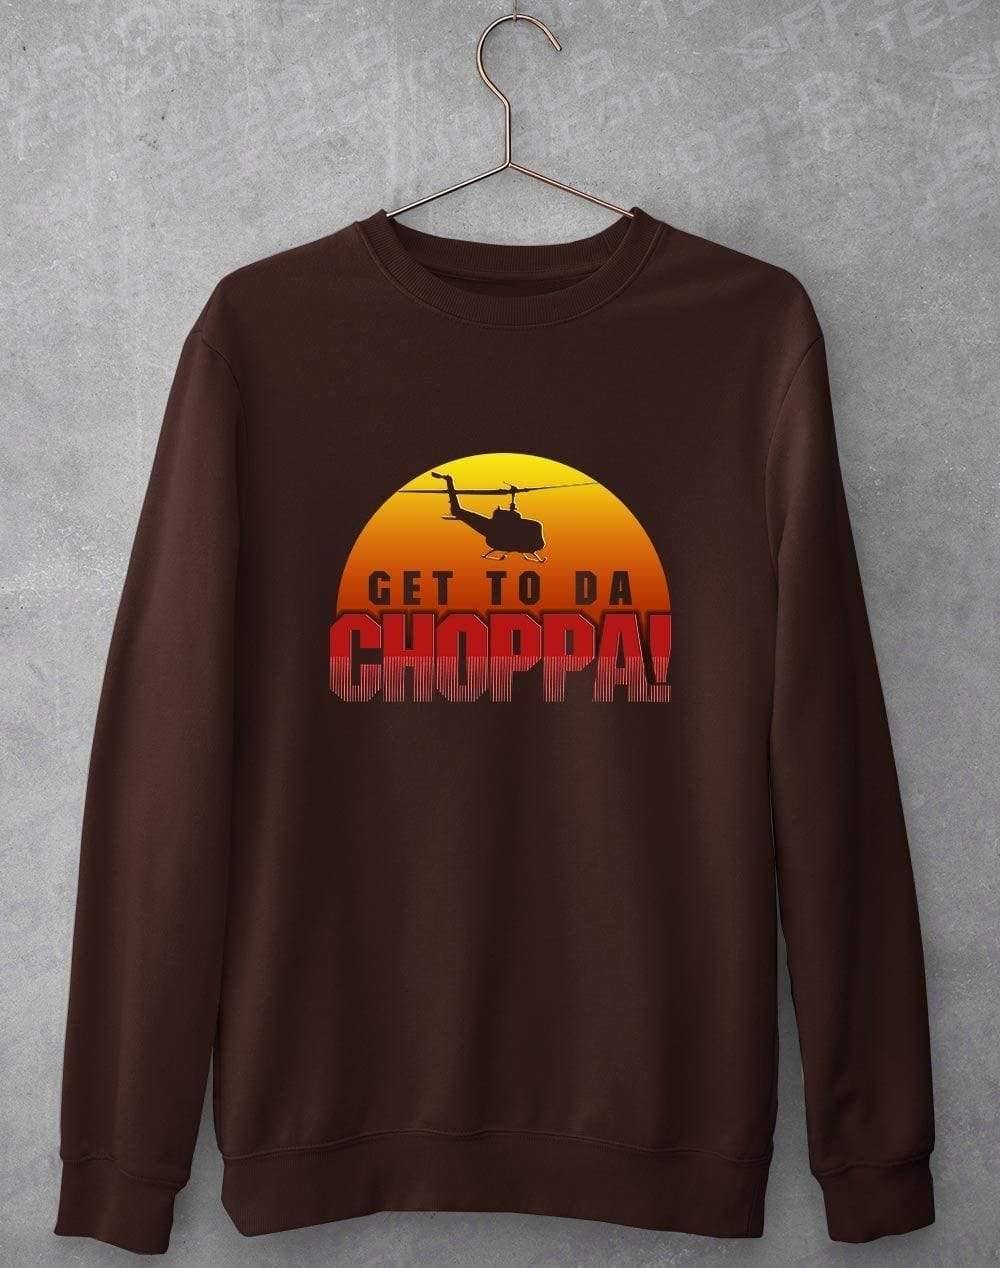 Get to da Choppa Sweatshirt S / Hot Chocolate  - Off World Tees